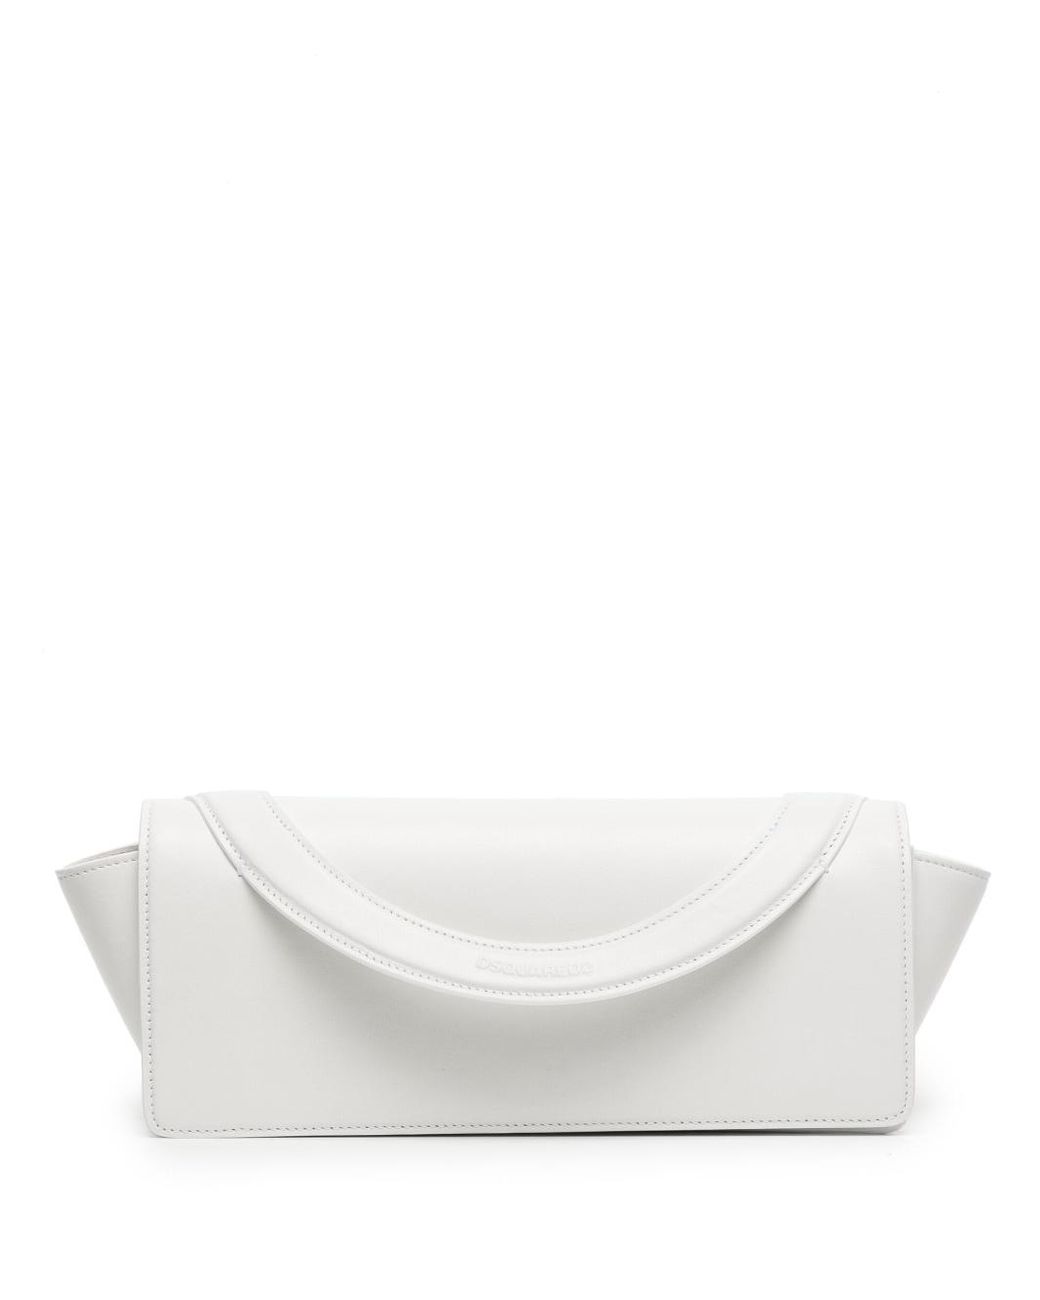 DSquared² Wrist-strap Clutch Bag in White | Lyst